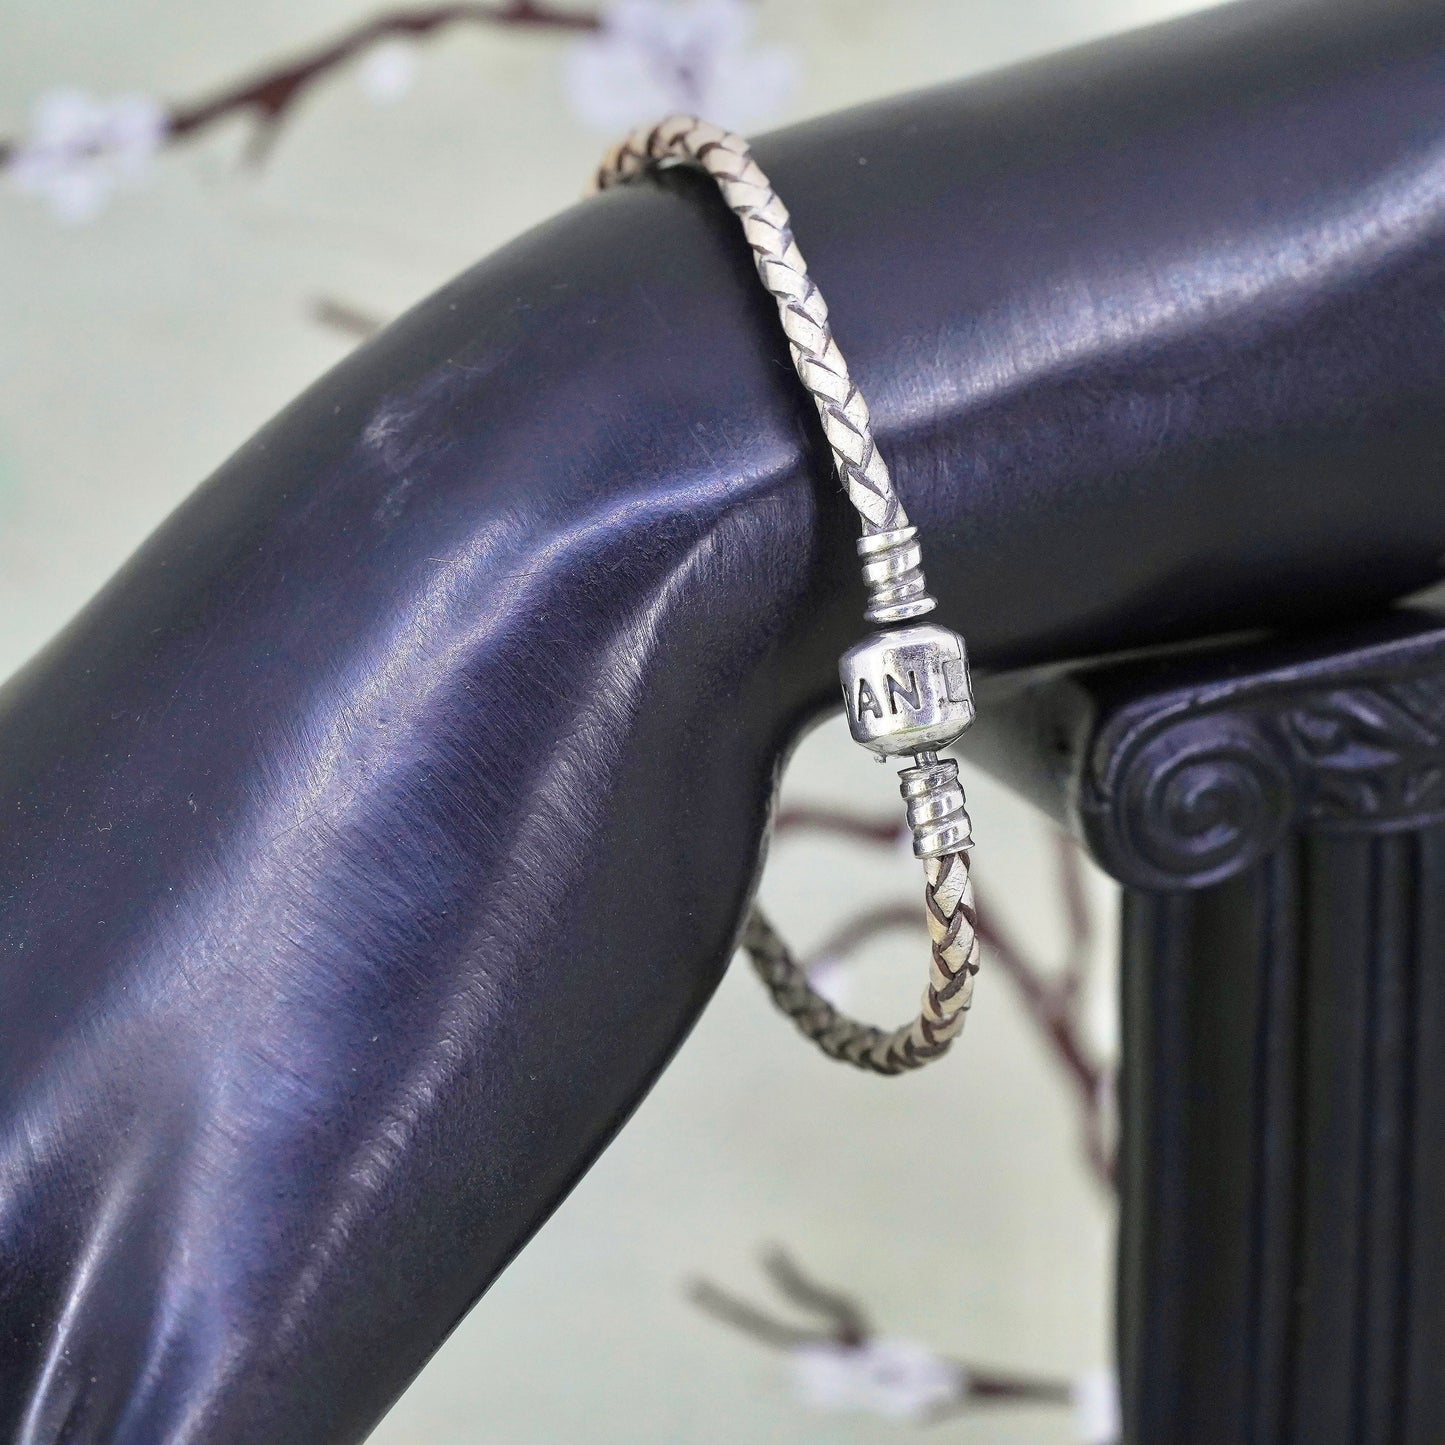 7.25", VTG Pandora woven leather chain, 925 sterling silver closure bracelet